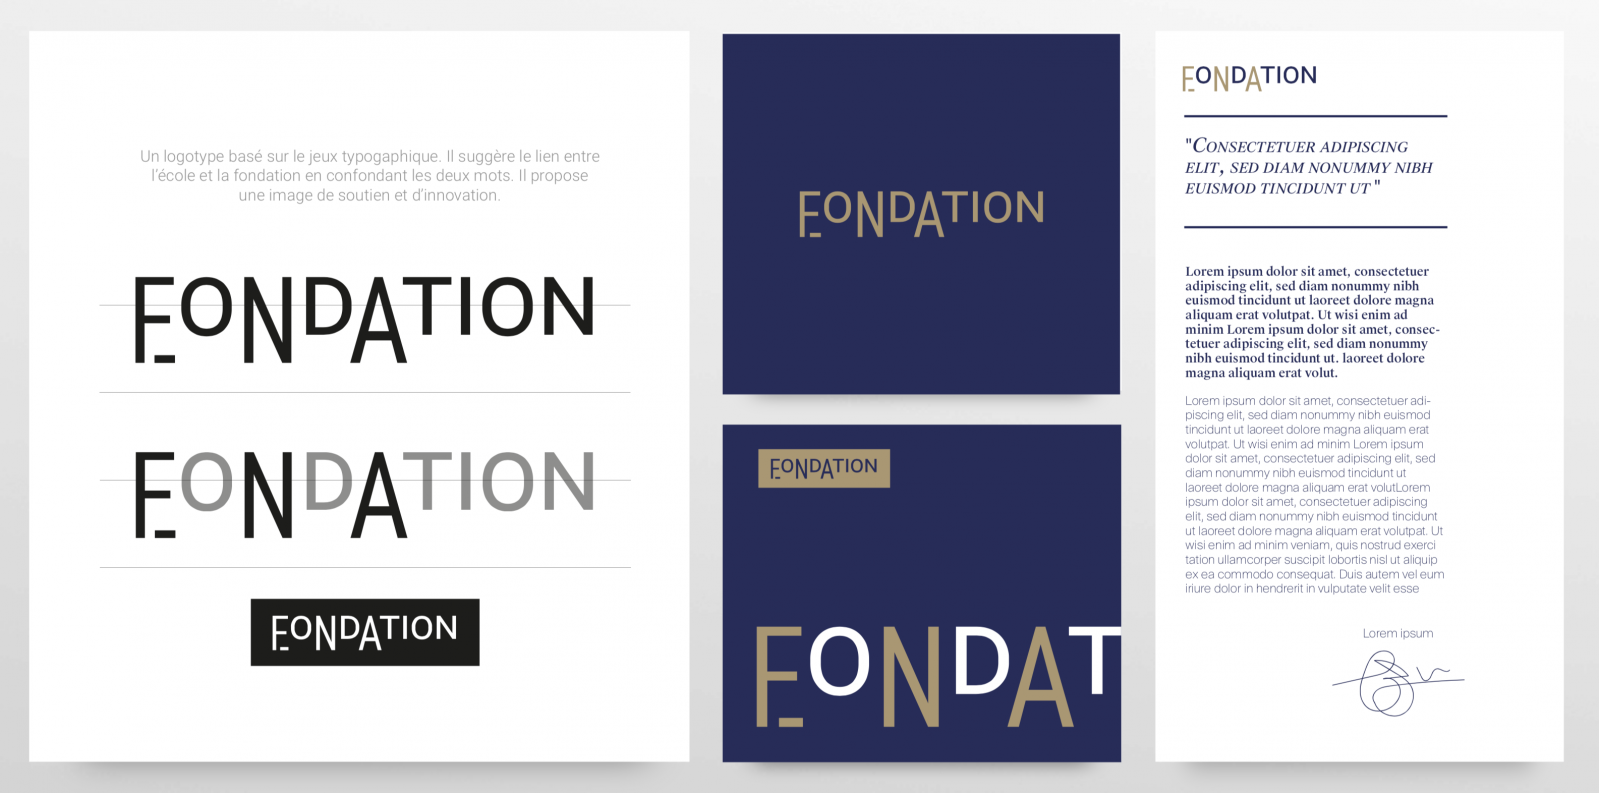 Fondation ENA